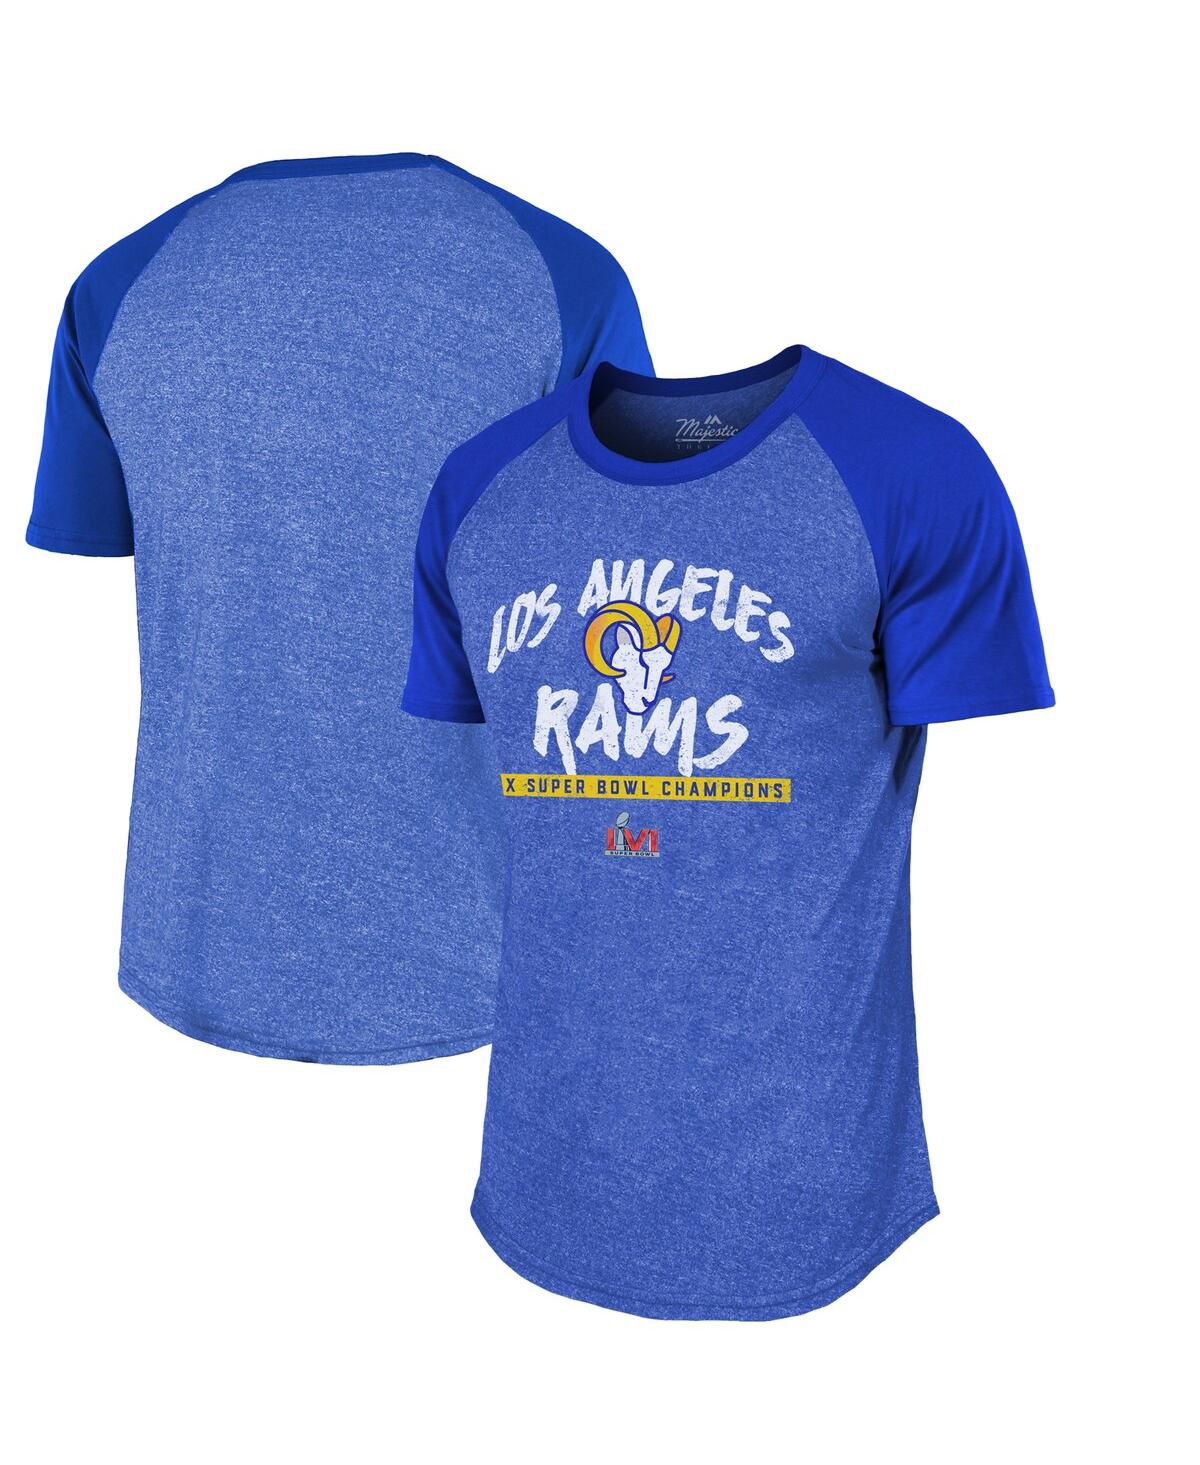 Men's Majestic Threads Royal Los Angeles Rams 2-Time Super Bowl Champions Tri-Blend Raglan T-shirt - Royal